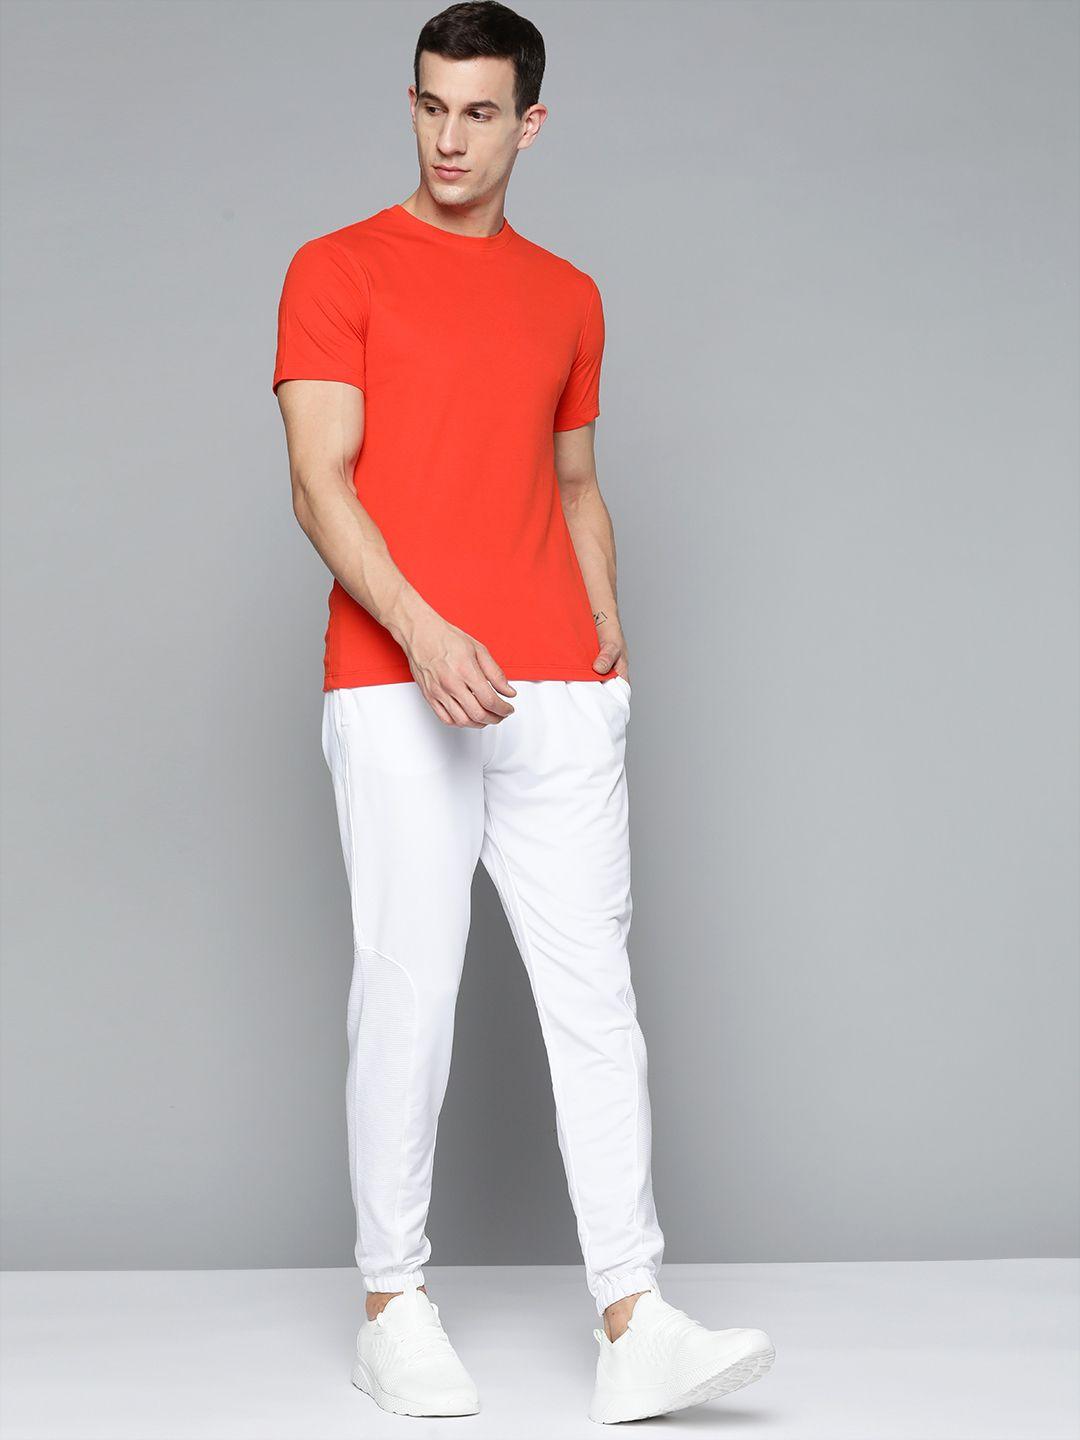 hrx by hrithik roshan lifestyle men optic white gold finish solid track pants